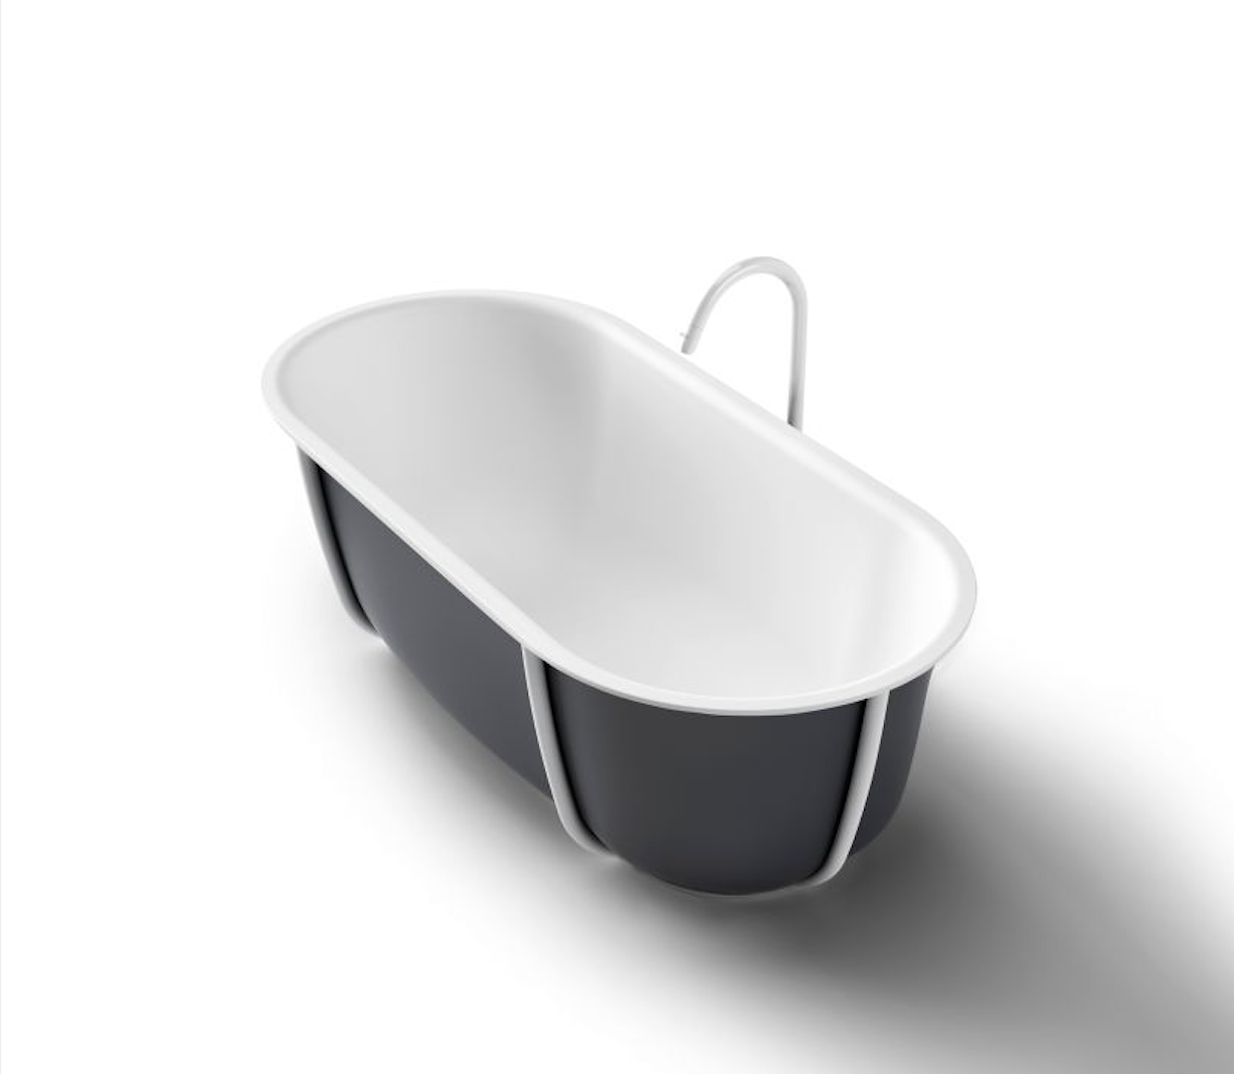 Product Image cuna free-standing bathtub